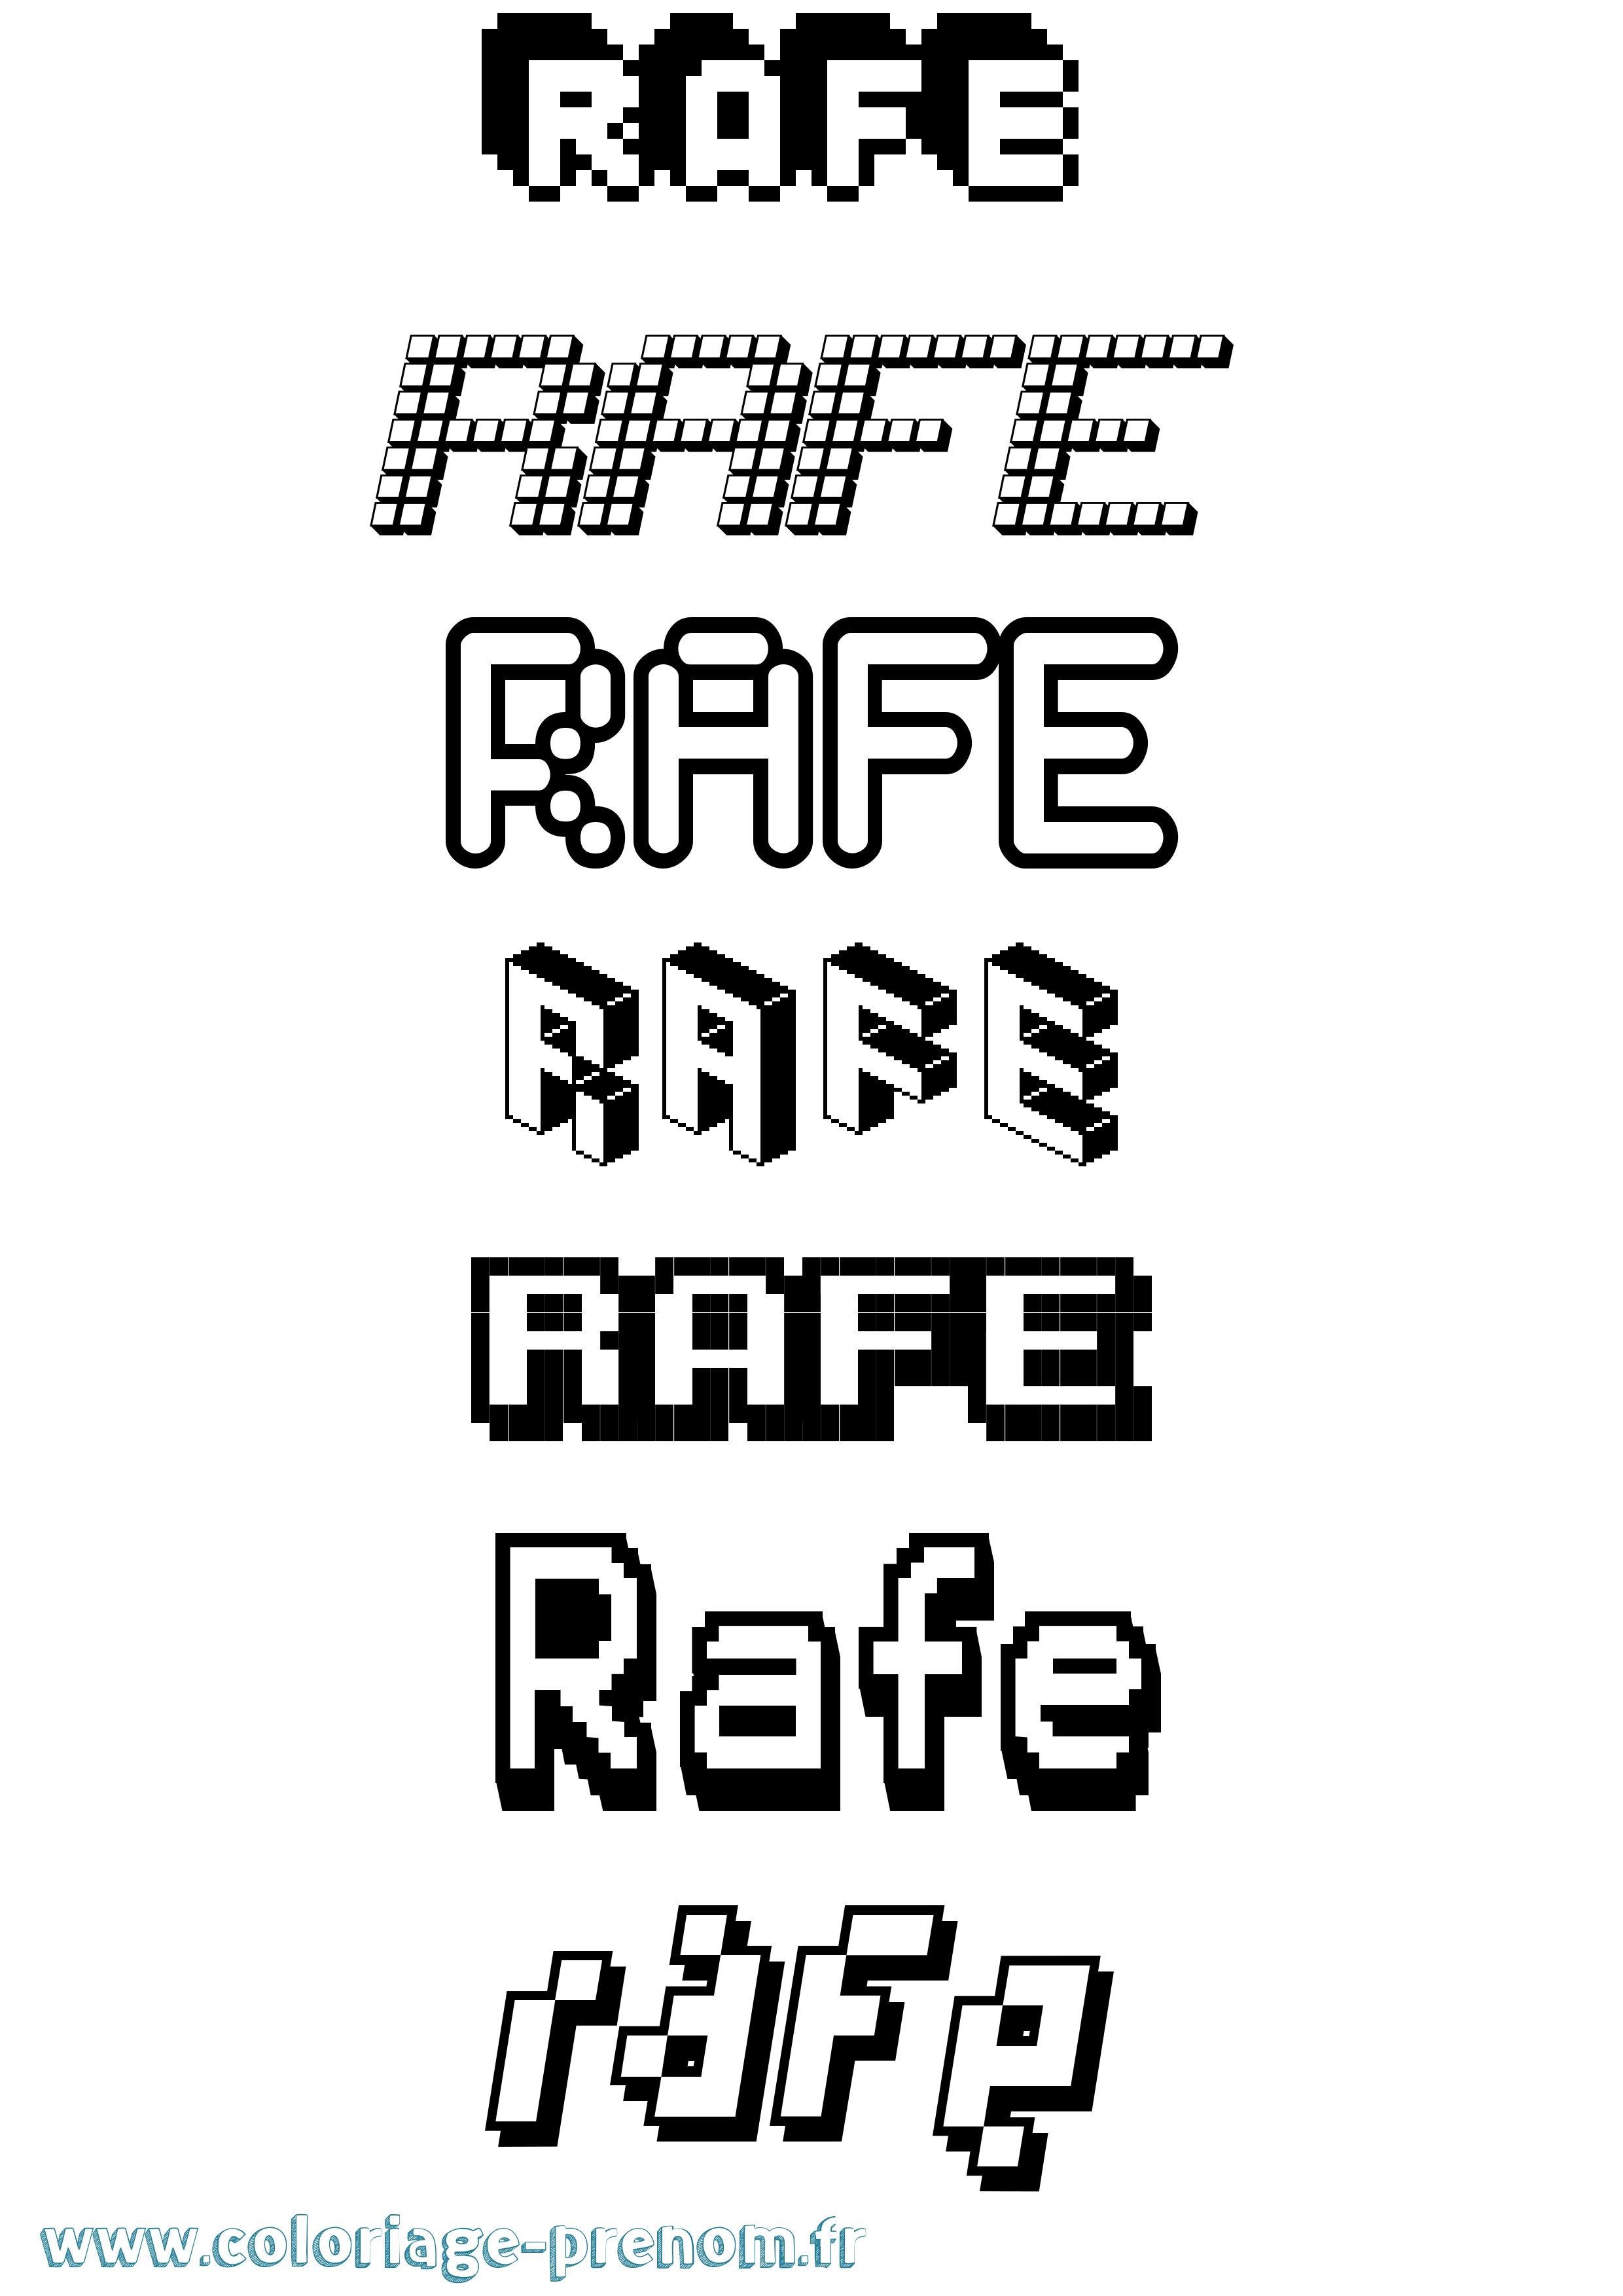 Coloriage prénom Rafe Pixel